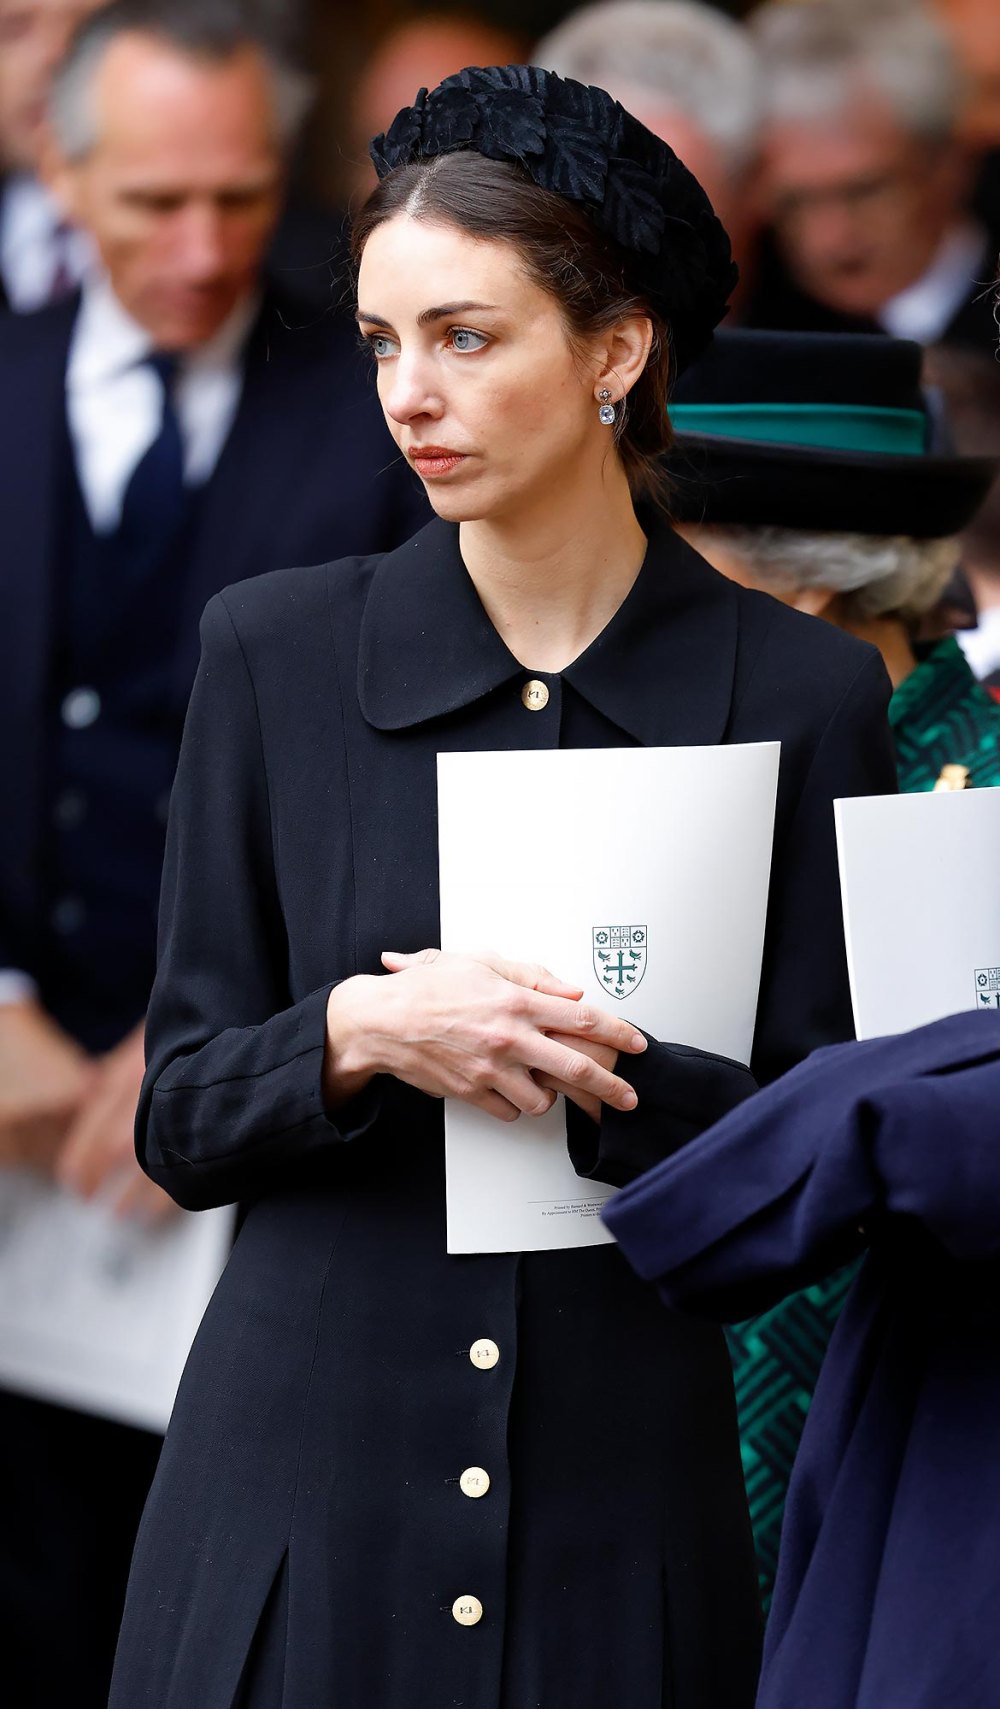 Rose Hanbury Is Very Upset by Prince William Affair Rumors Resurfacing Expert Claims